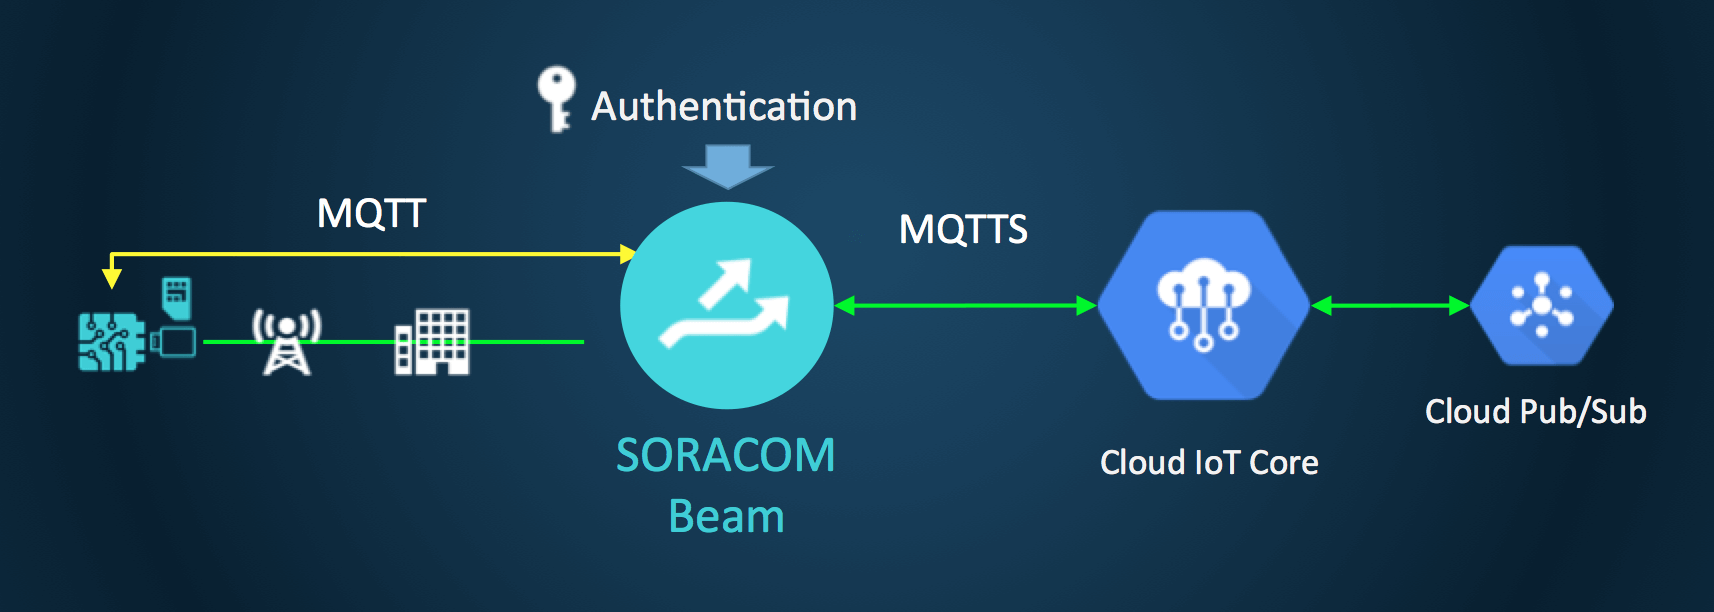 Soracom Beam + Google Cloud IoT Core